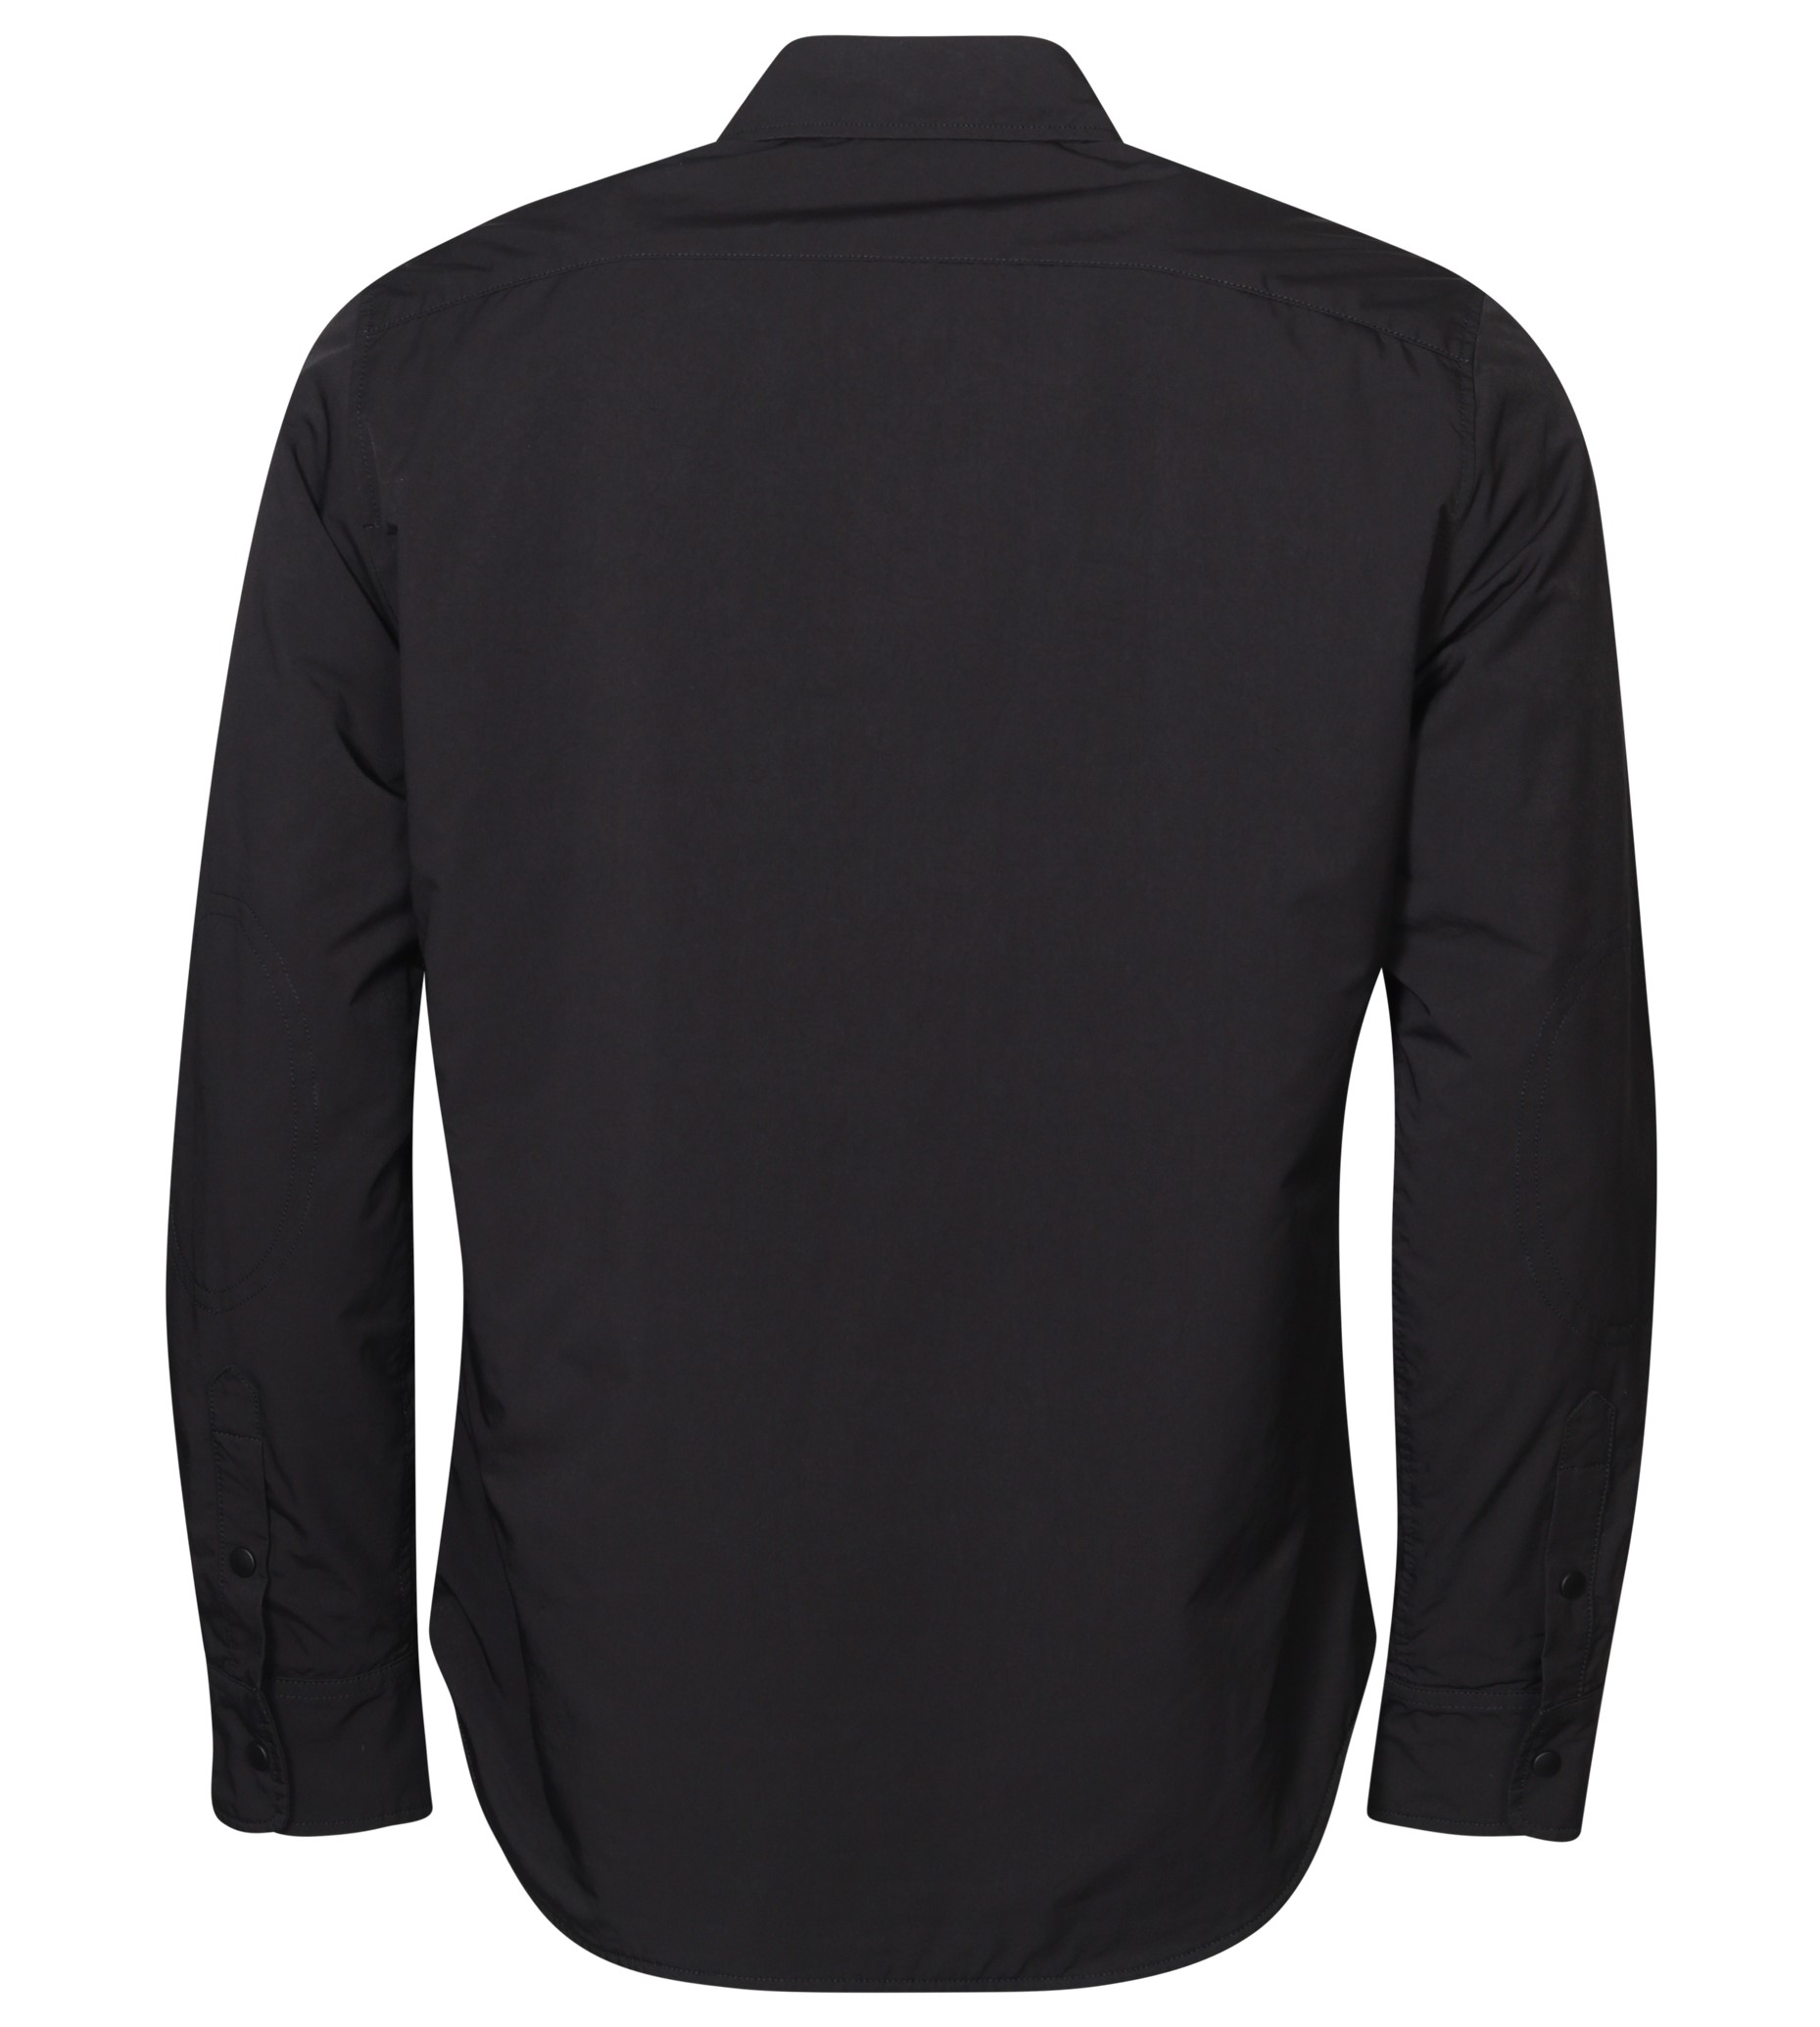 ASPESI Wool/Nylon Overshirt in Black